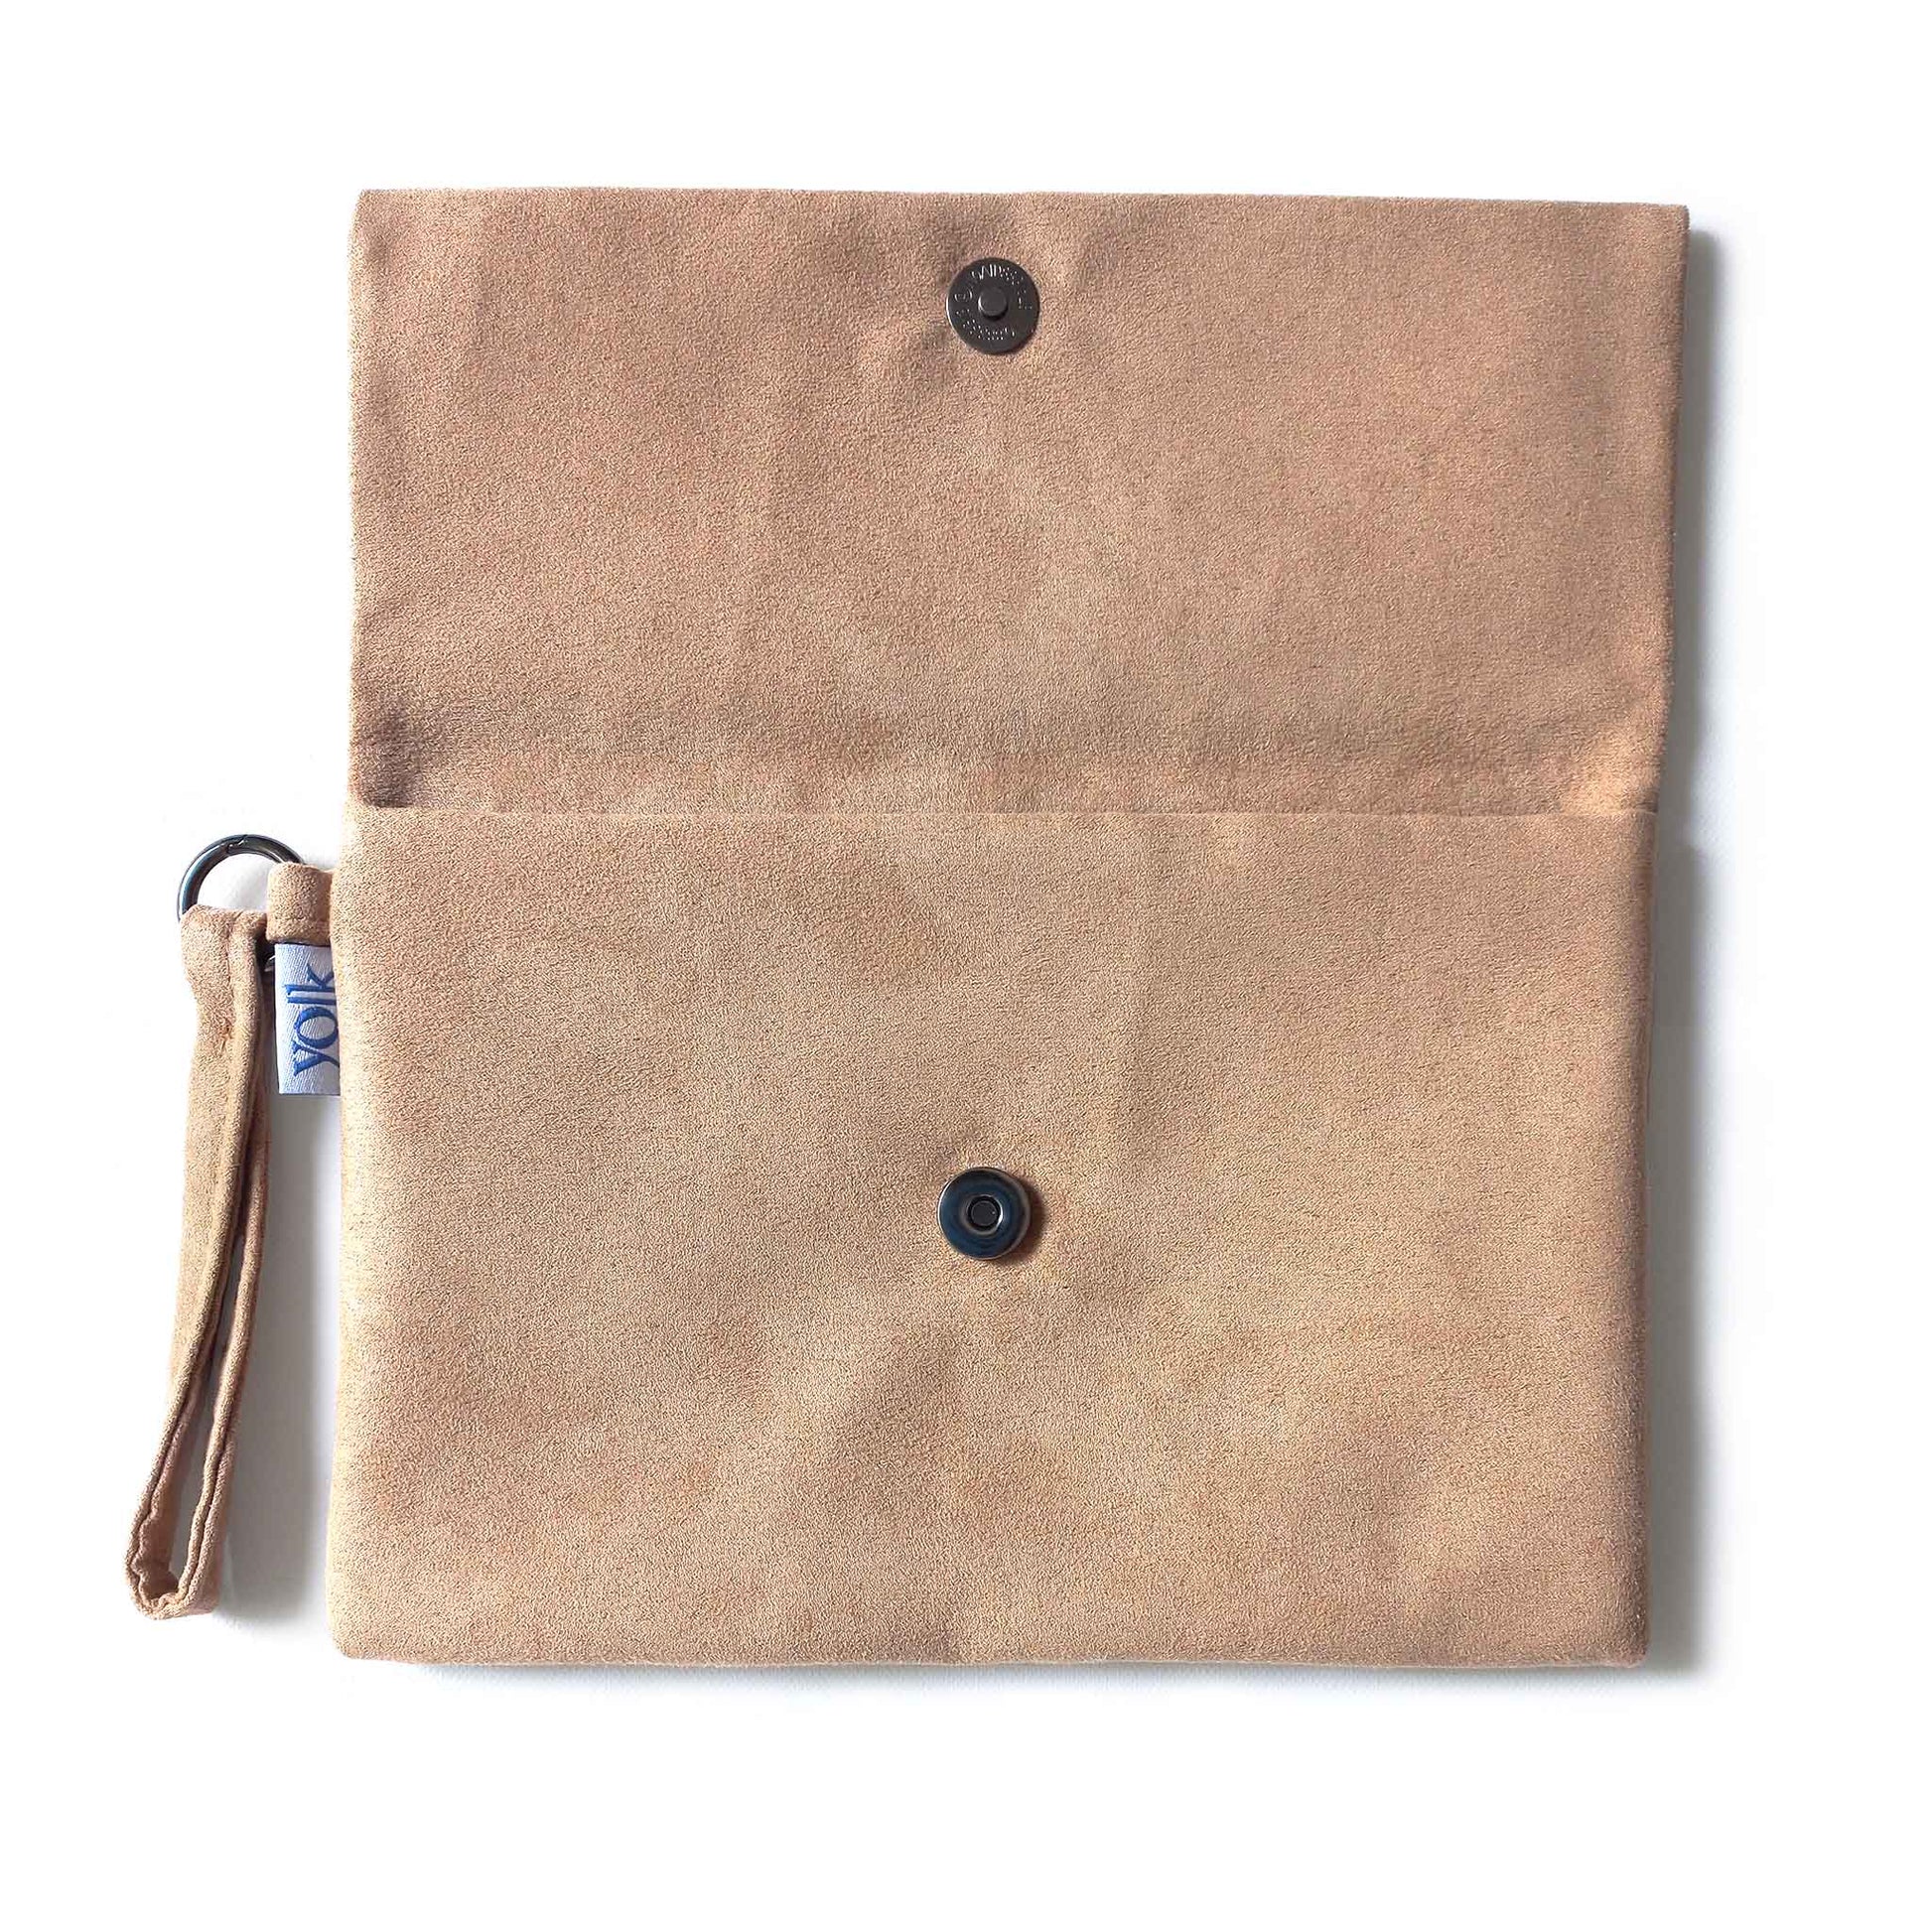 Open suede clutch bag, button detail